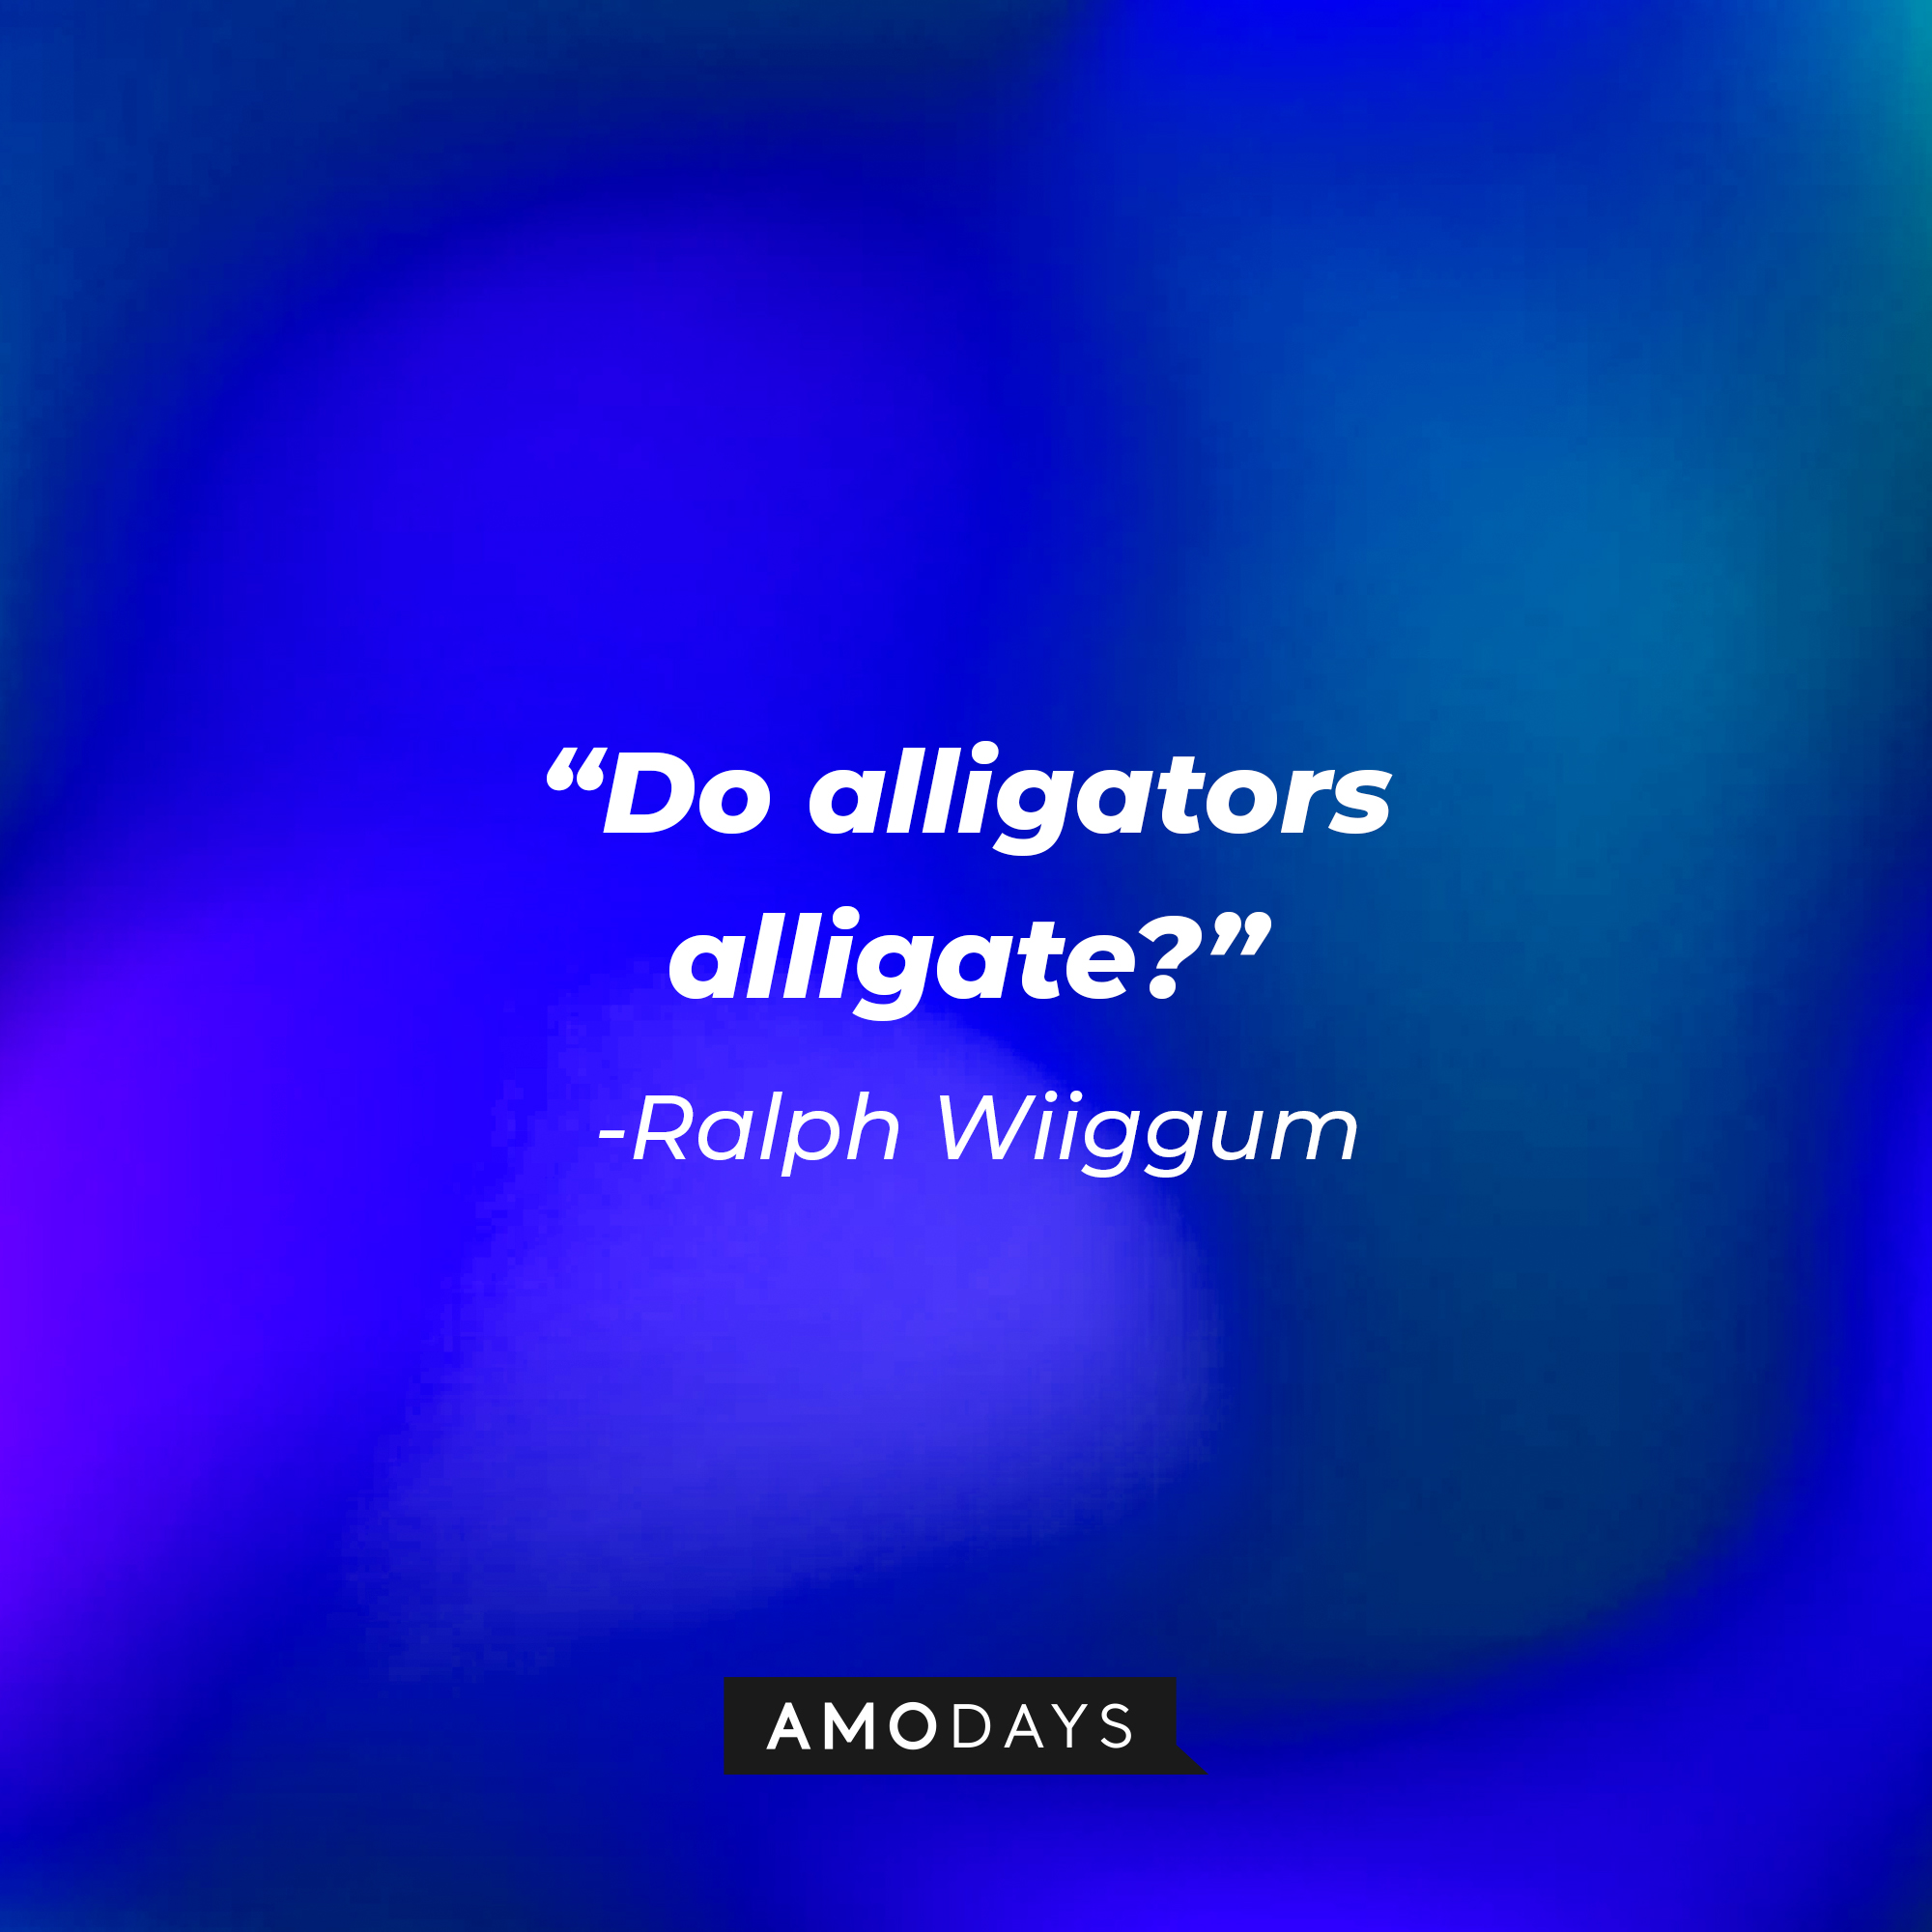 Ralph Wiiggum’s quote: “Do alligators alligate?” |  Source: AmoDays